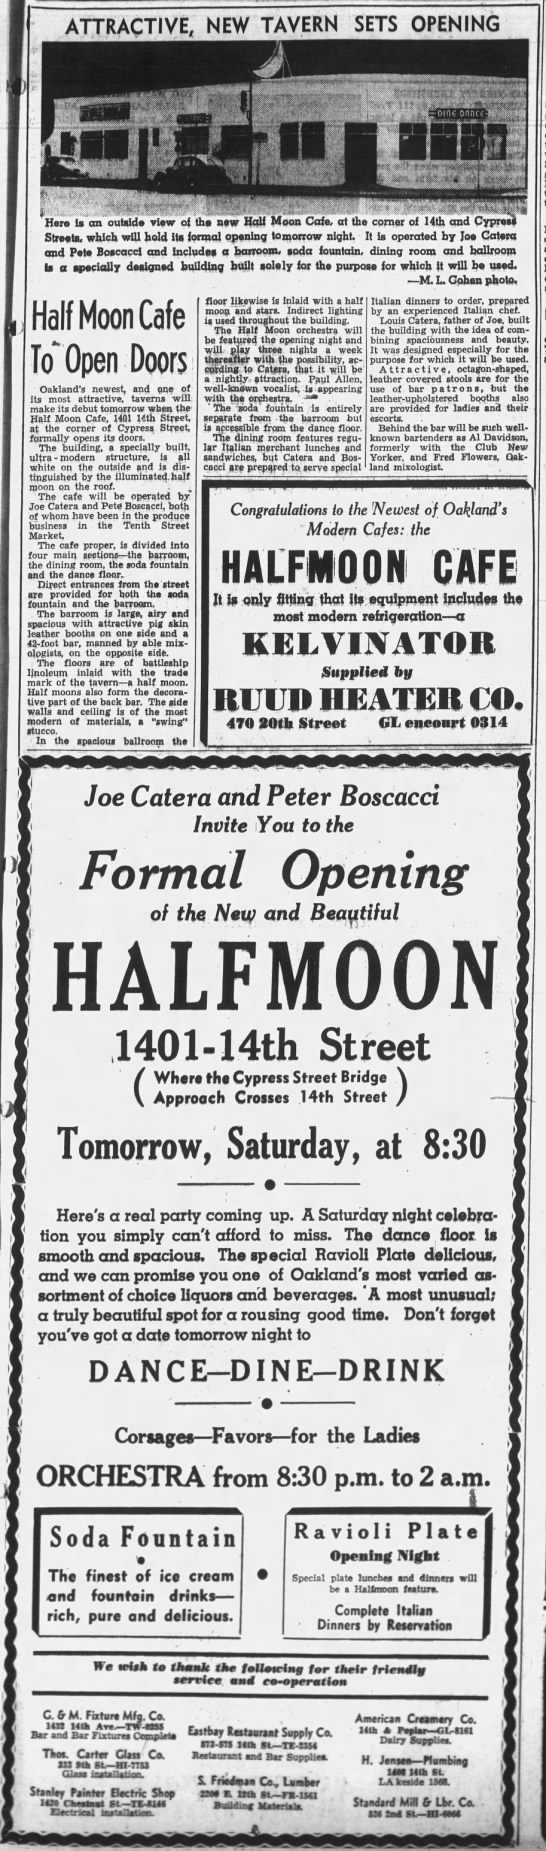 Half Moon Cafe opening - 